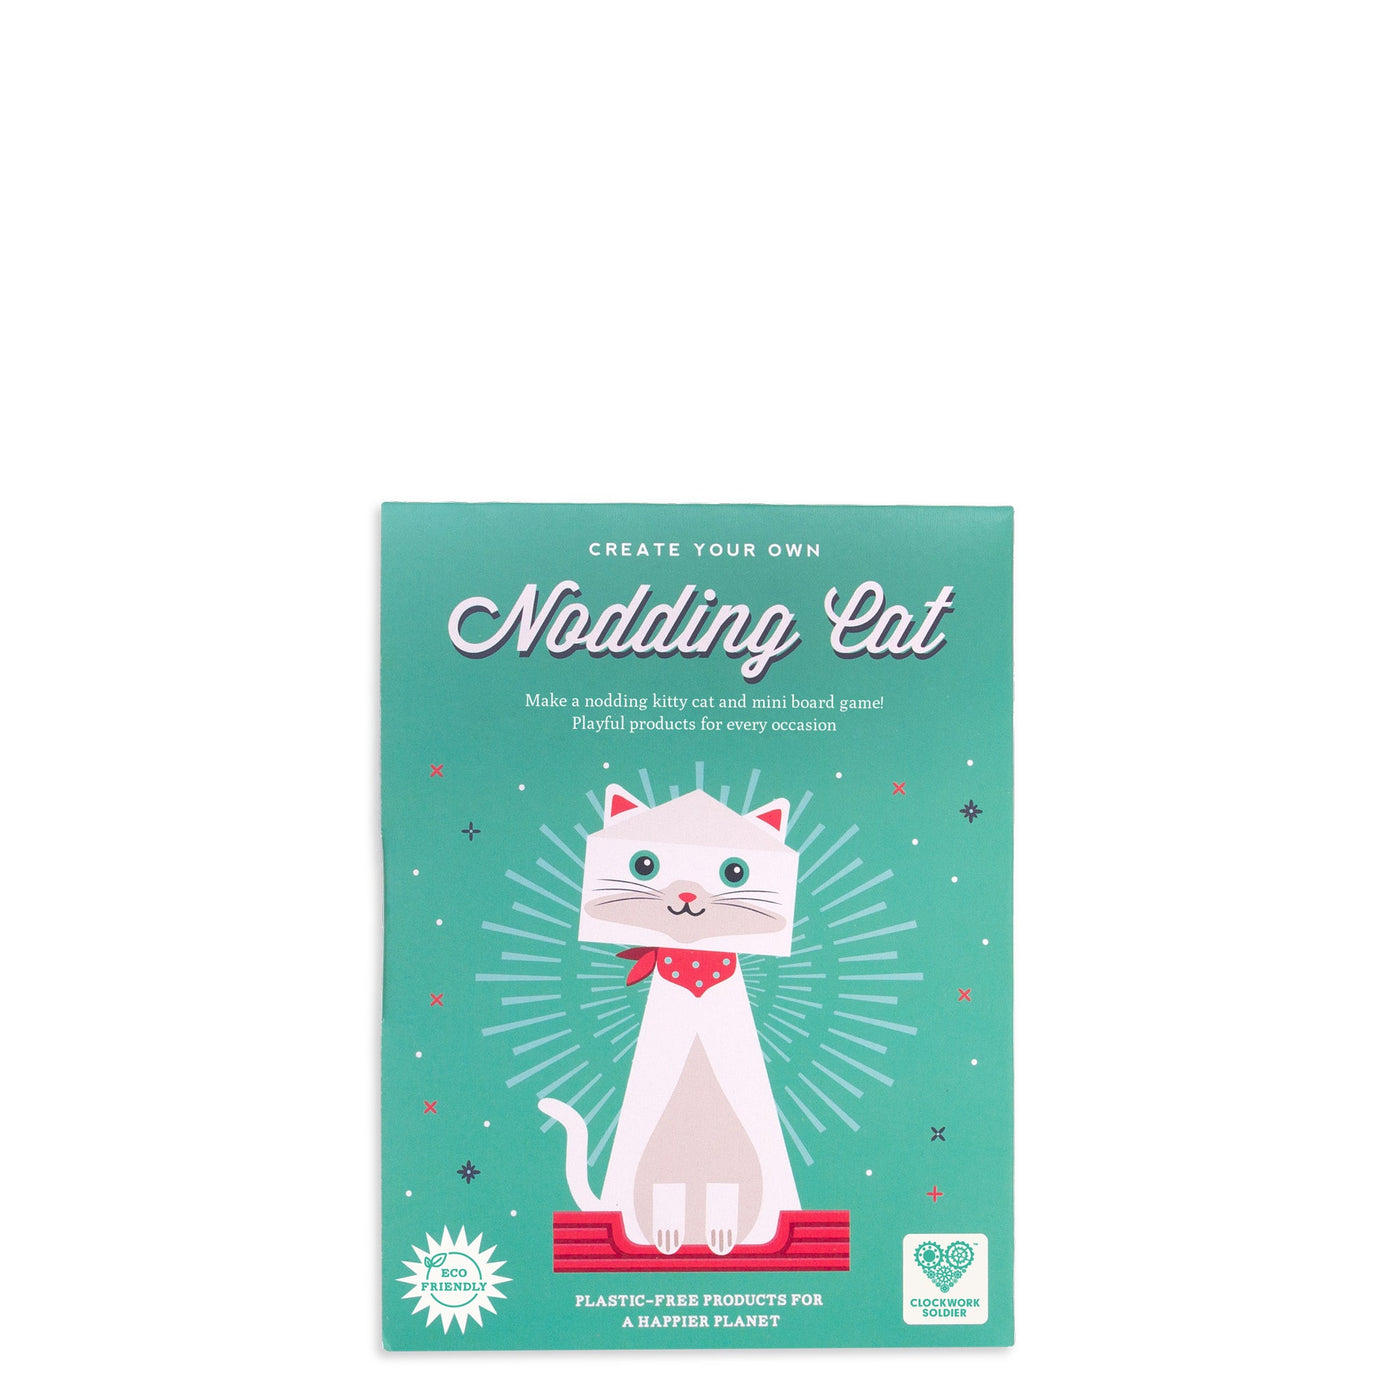 Create Your Own Nodding Cat Kit